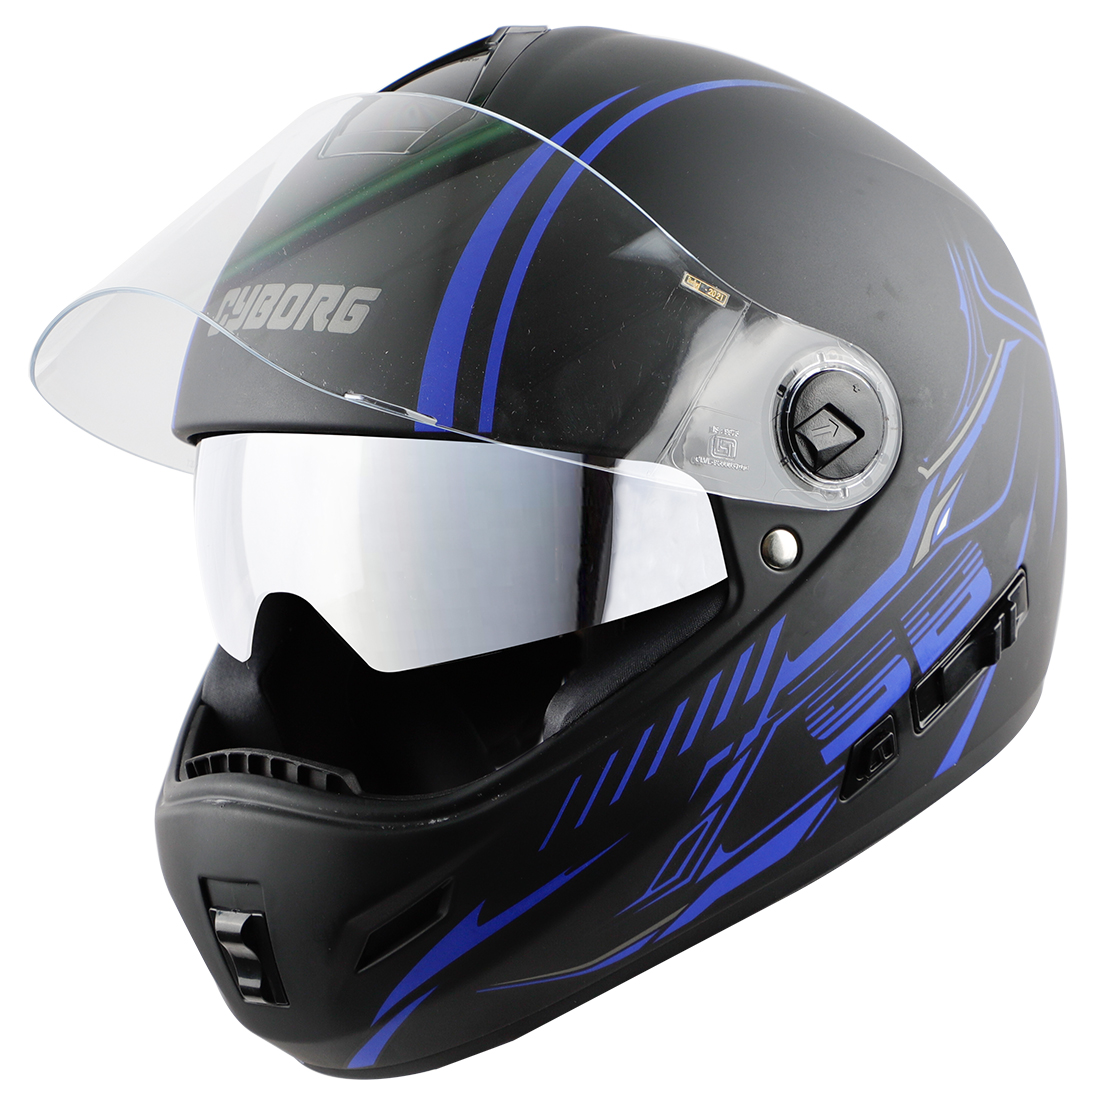 Steelbird Cyborg Cipher Full Face Helmet with Chrome Silver Sun Shield, ISI Certified Helmet (Matt Black Blue)